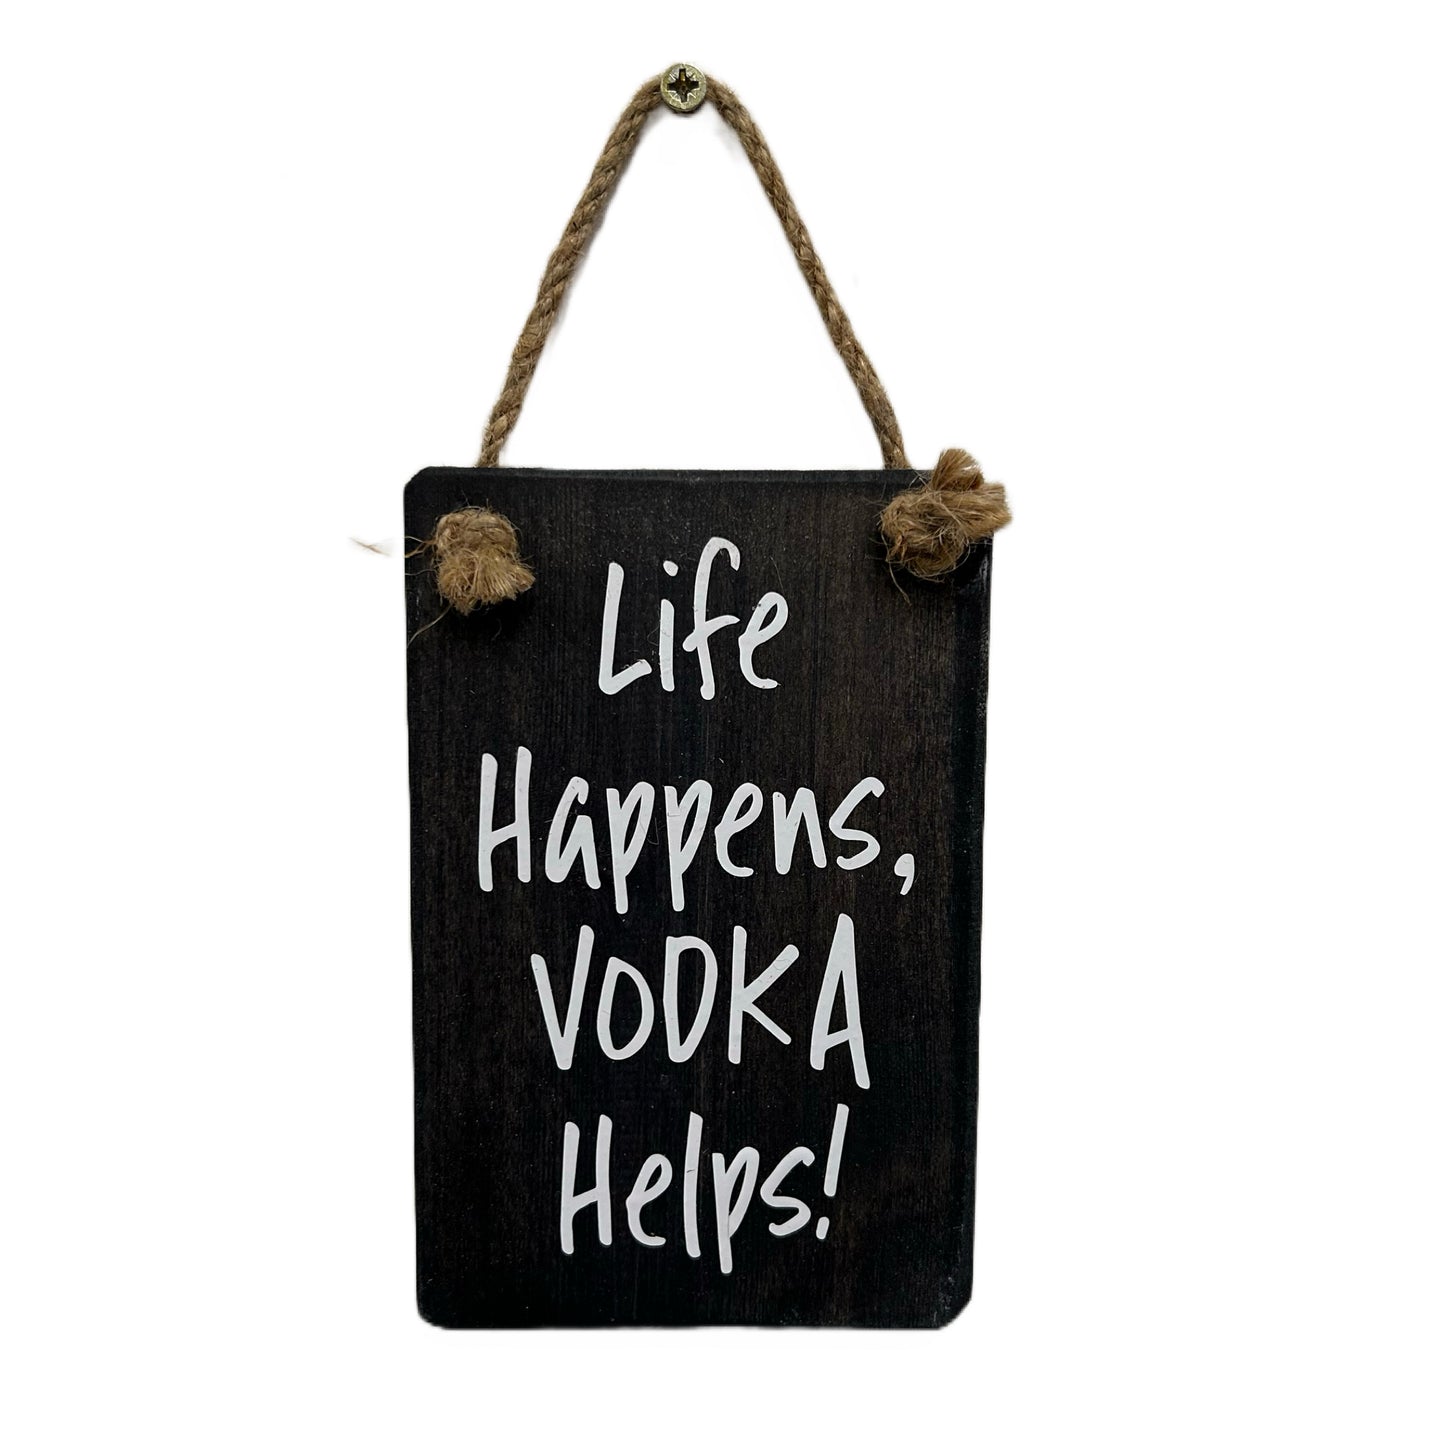 Life happens, Vodka helps!